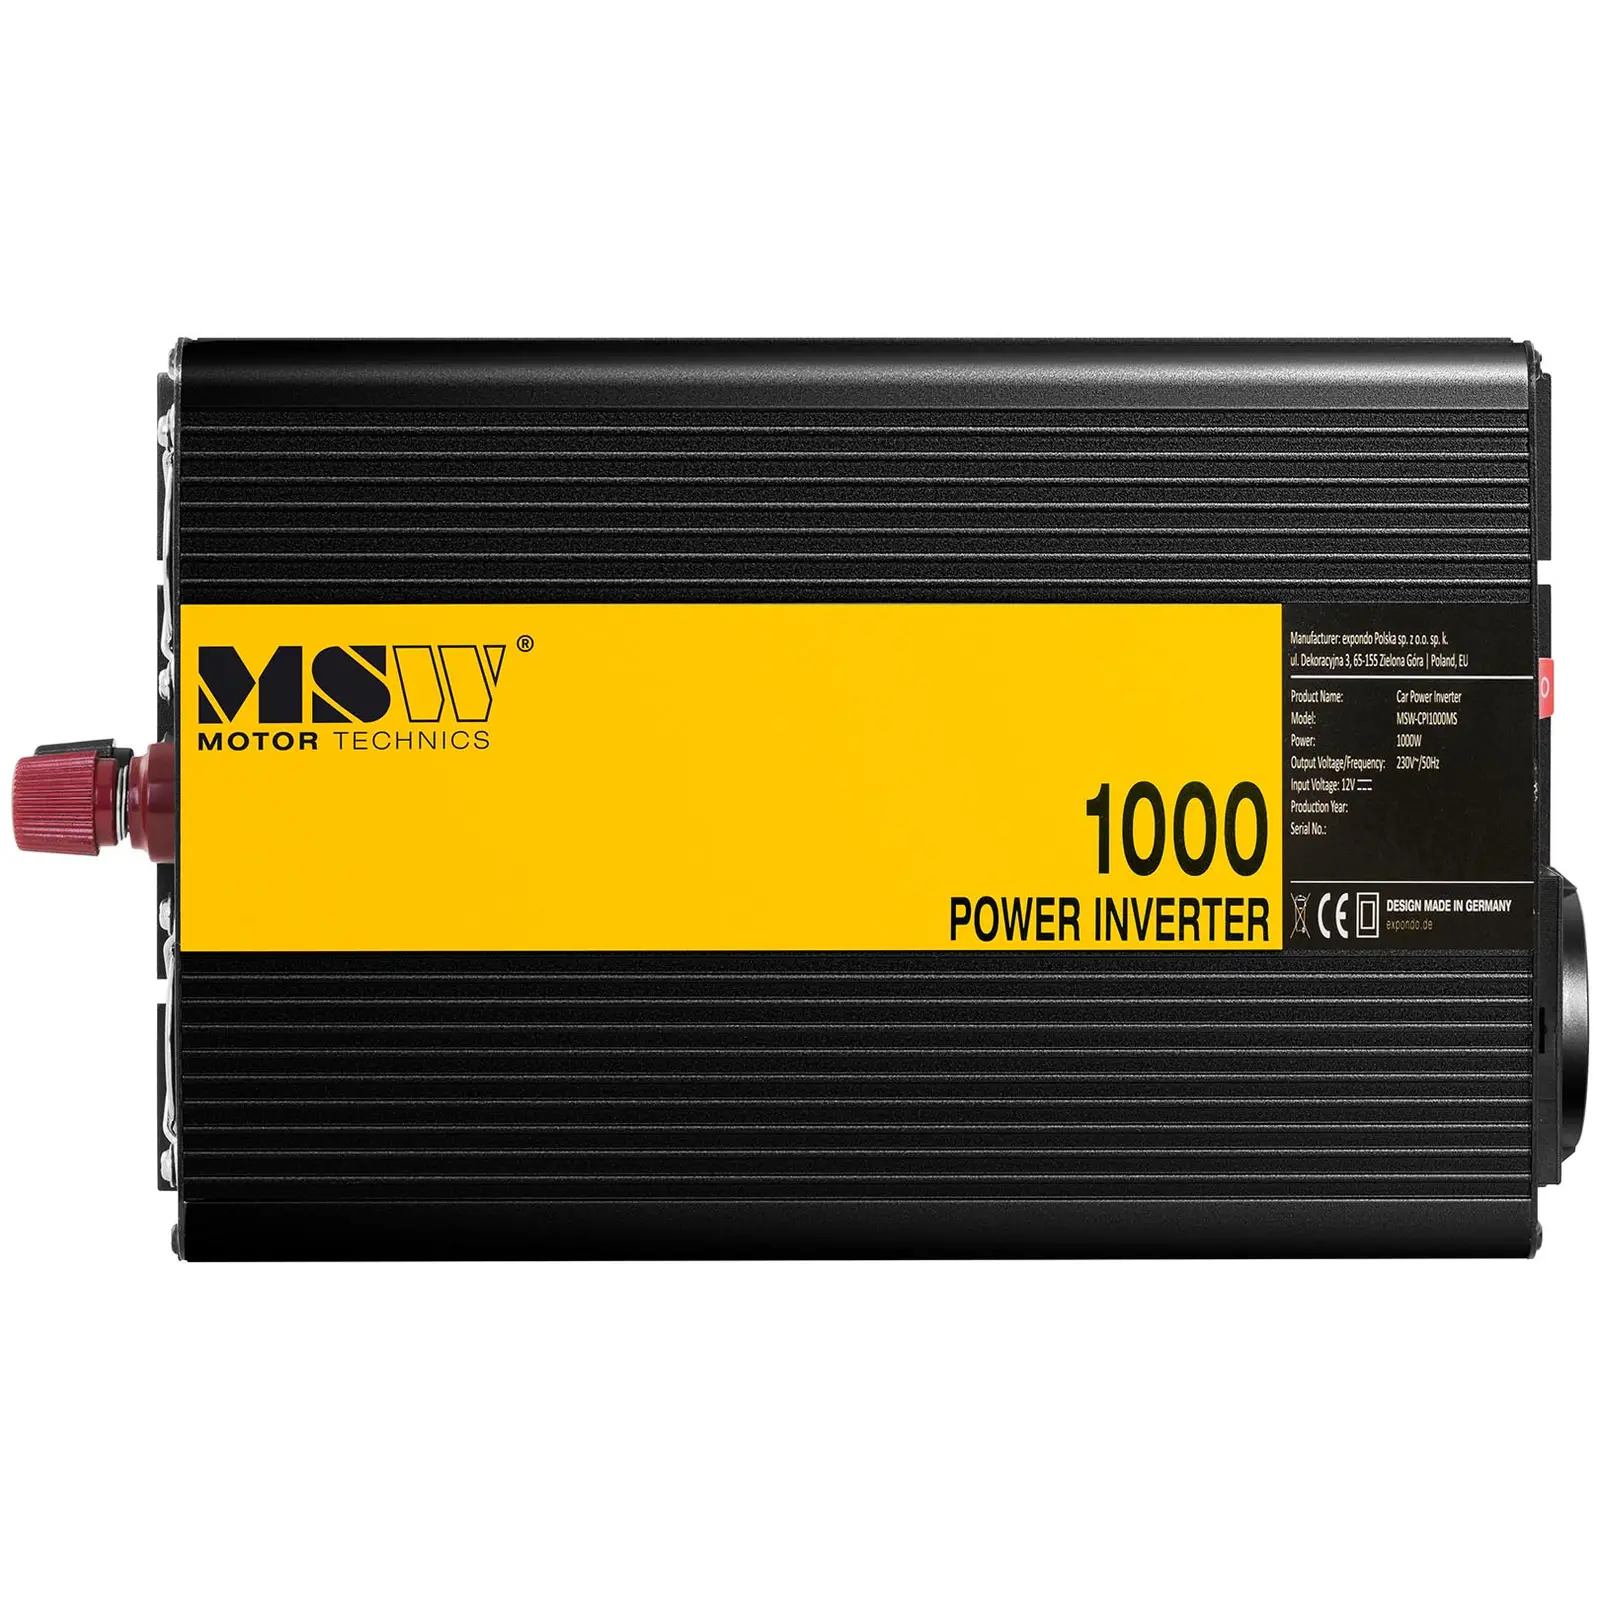 Power inverter - 1000 W